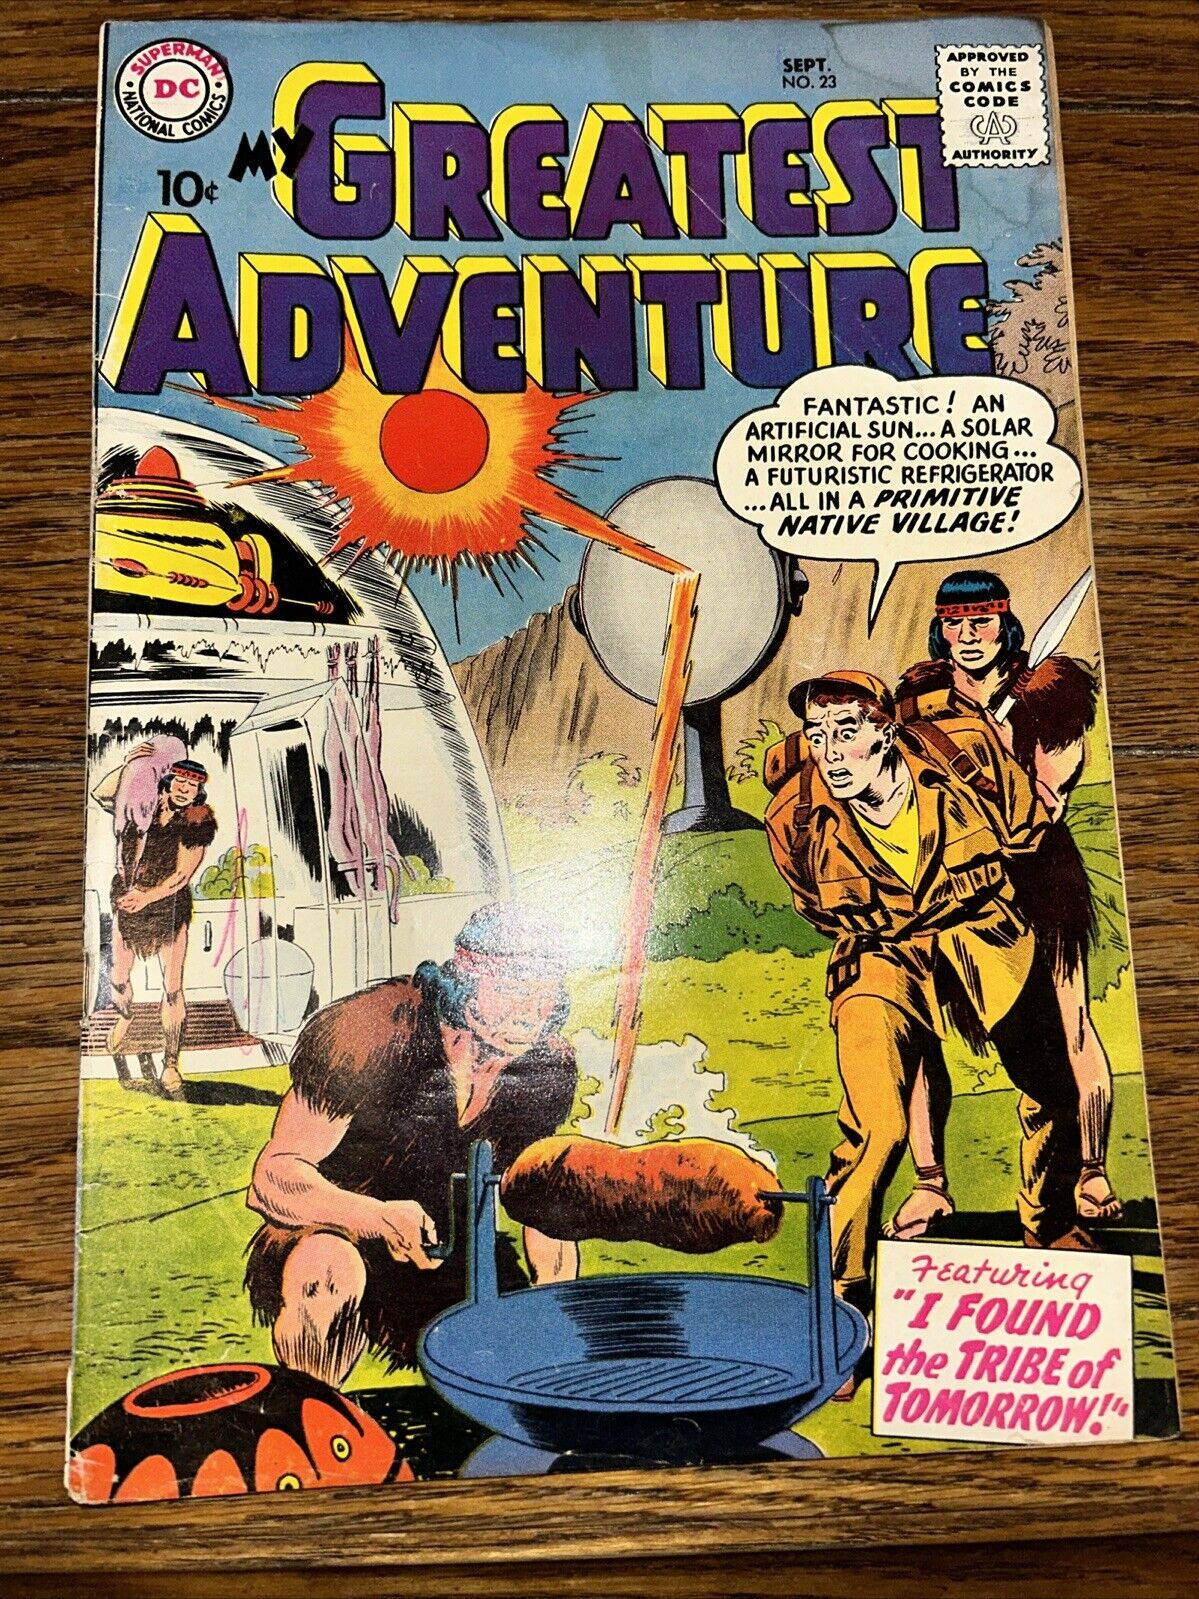 My Greatest Adventure Comic #23 September 1958 Good/Fair Cond/ See Description